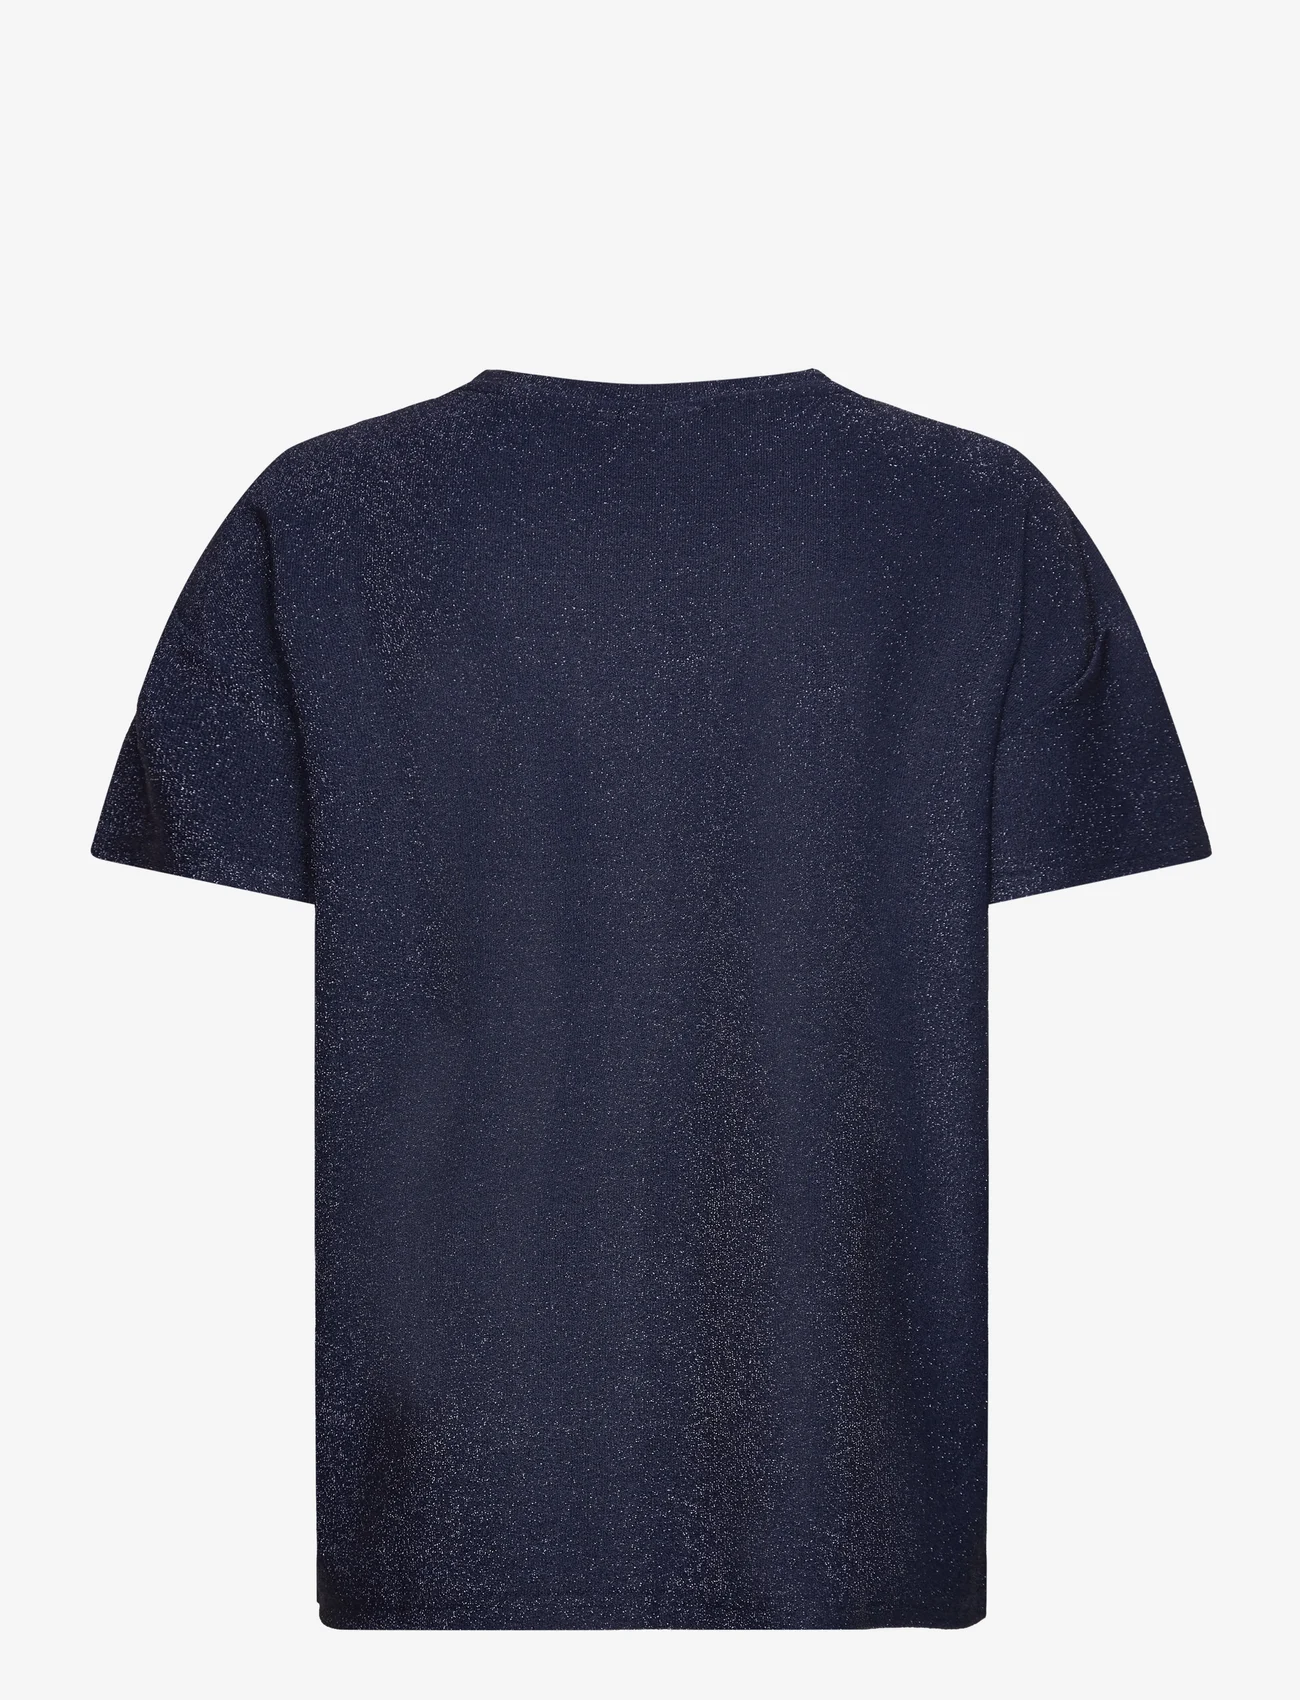 Coster Copenhagen - Shimmer tee in lurex jersey - t-shirts - royal blue shimmer - 1